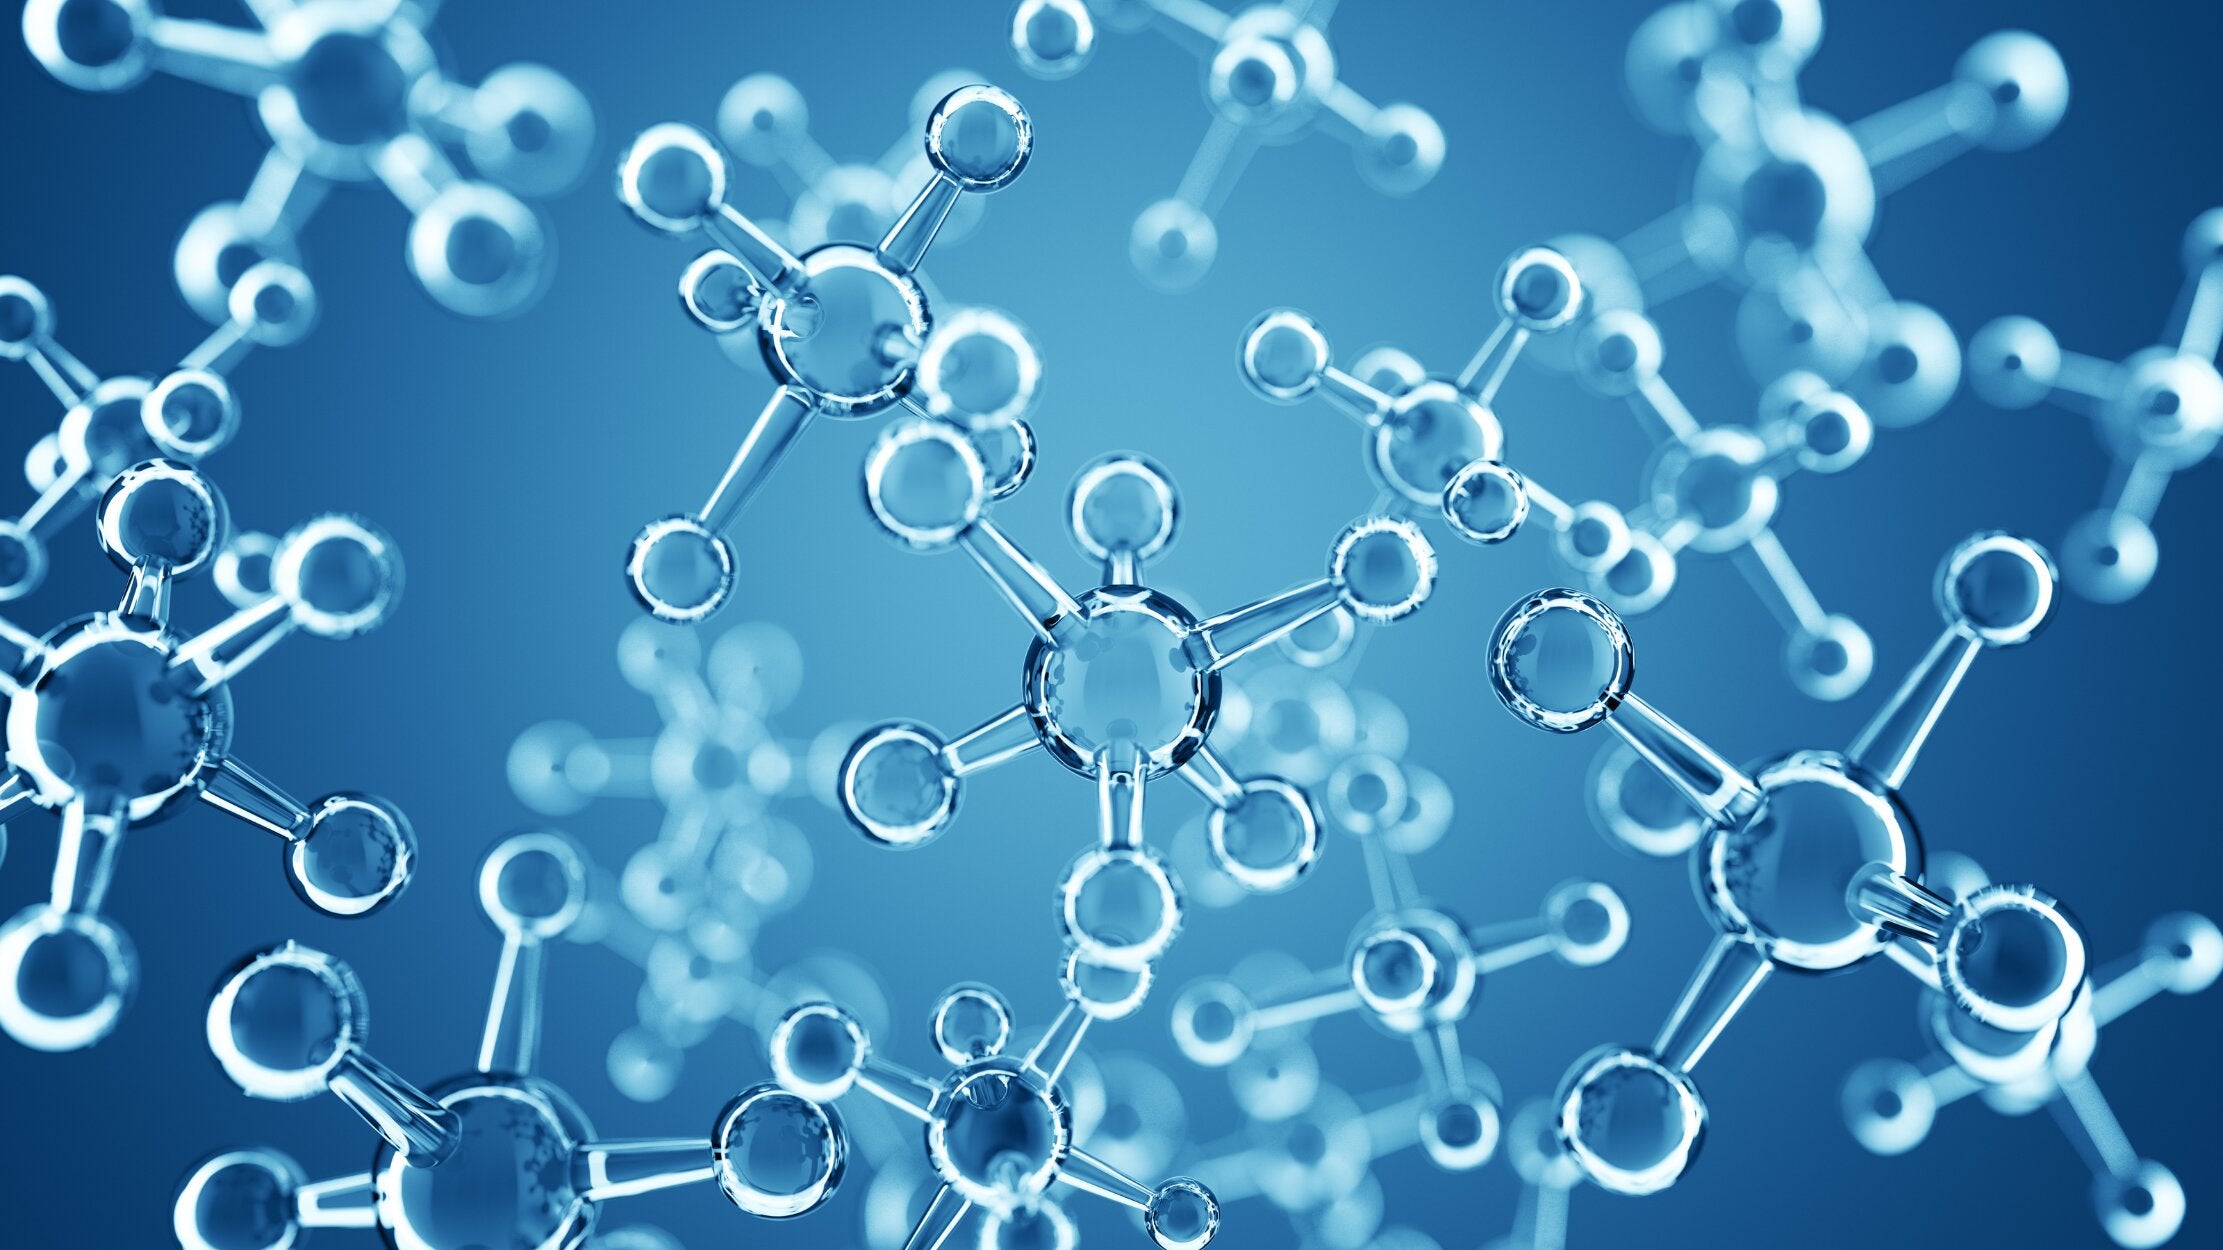 3D illustration of molecular hydrogen structure in blue tone.